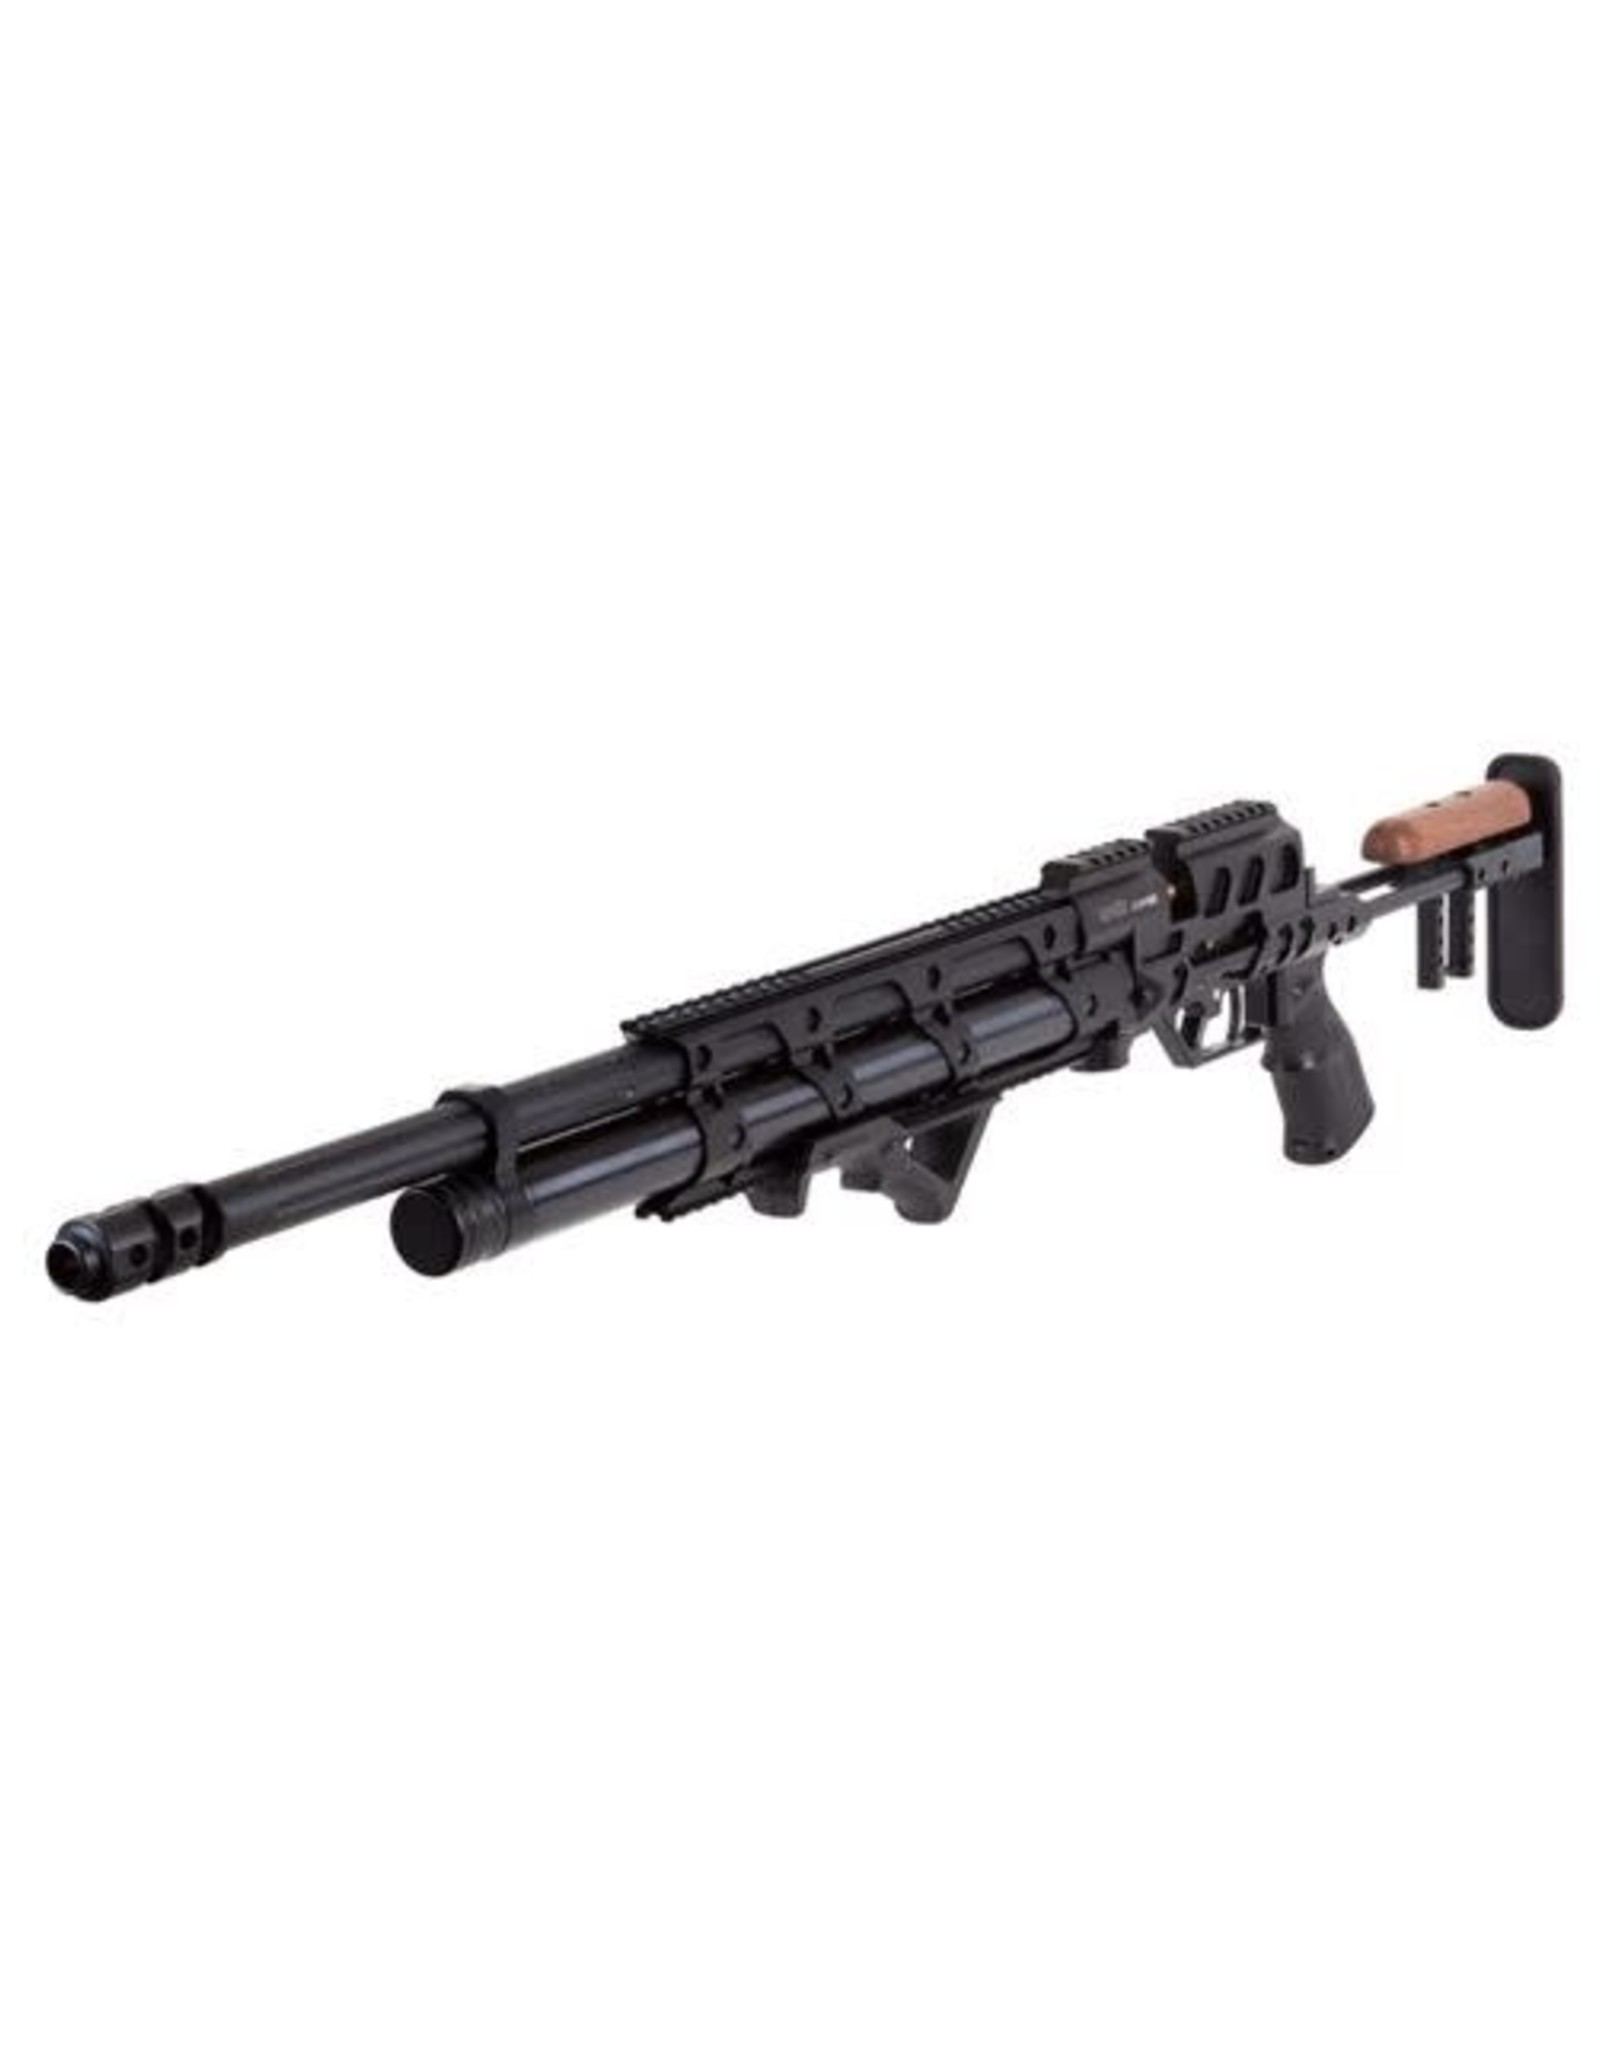 Evanix Evanix Sniper-K PCP Air Rifle with Synthetic Stock .50 Caliber (12.7mm) - 5 Round Magazine